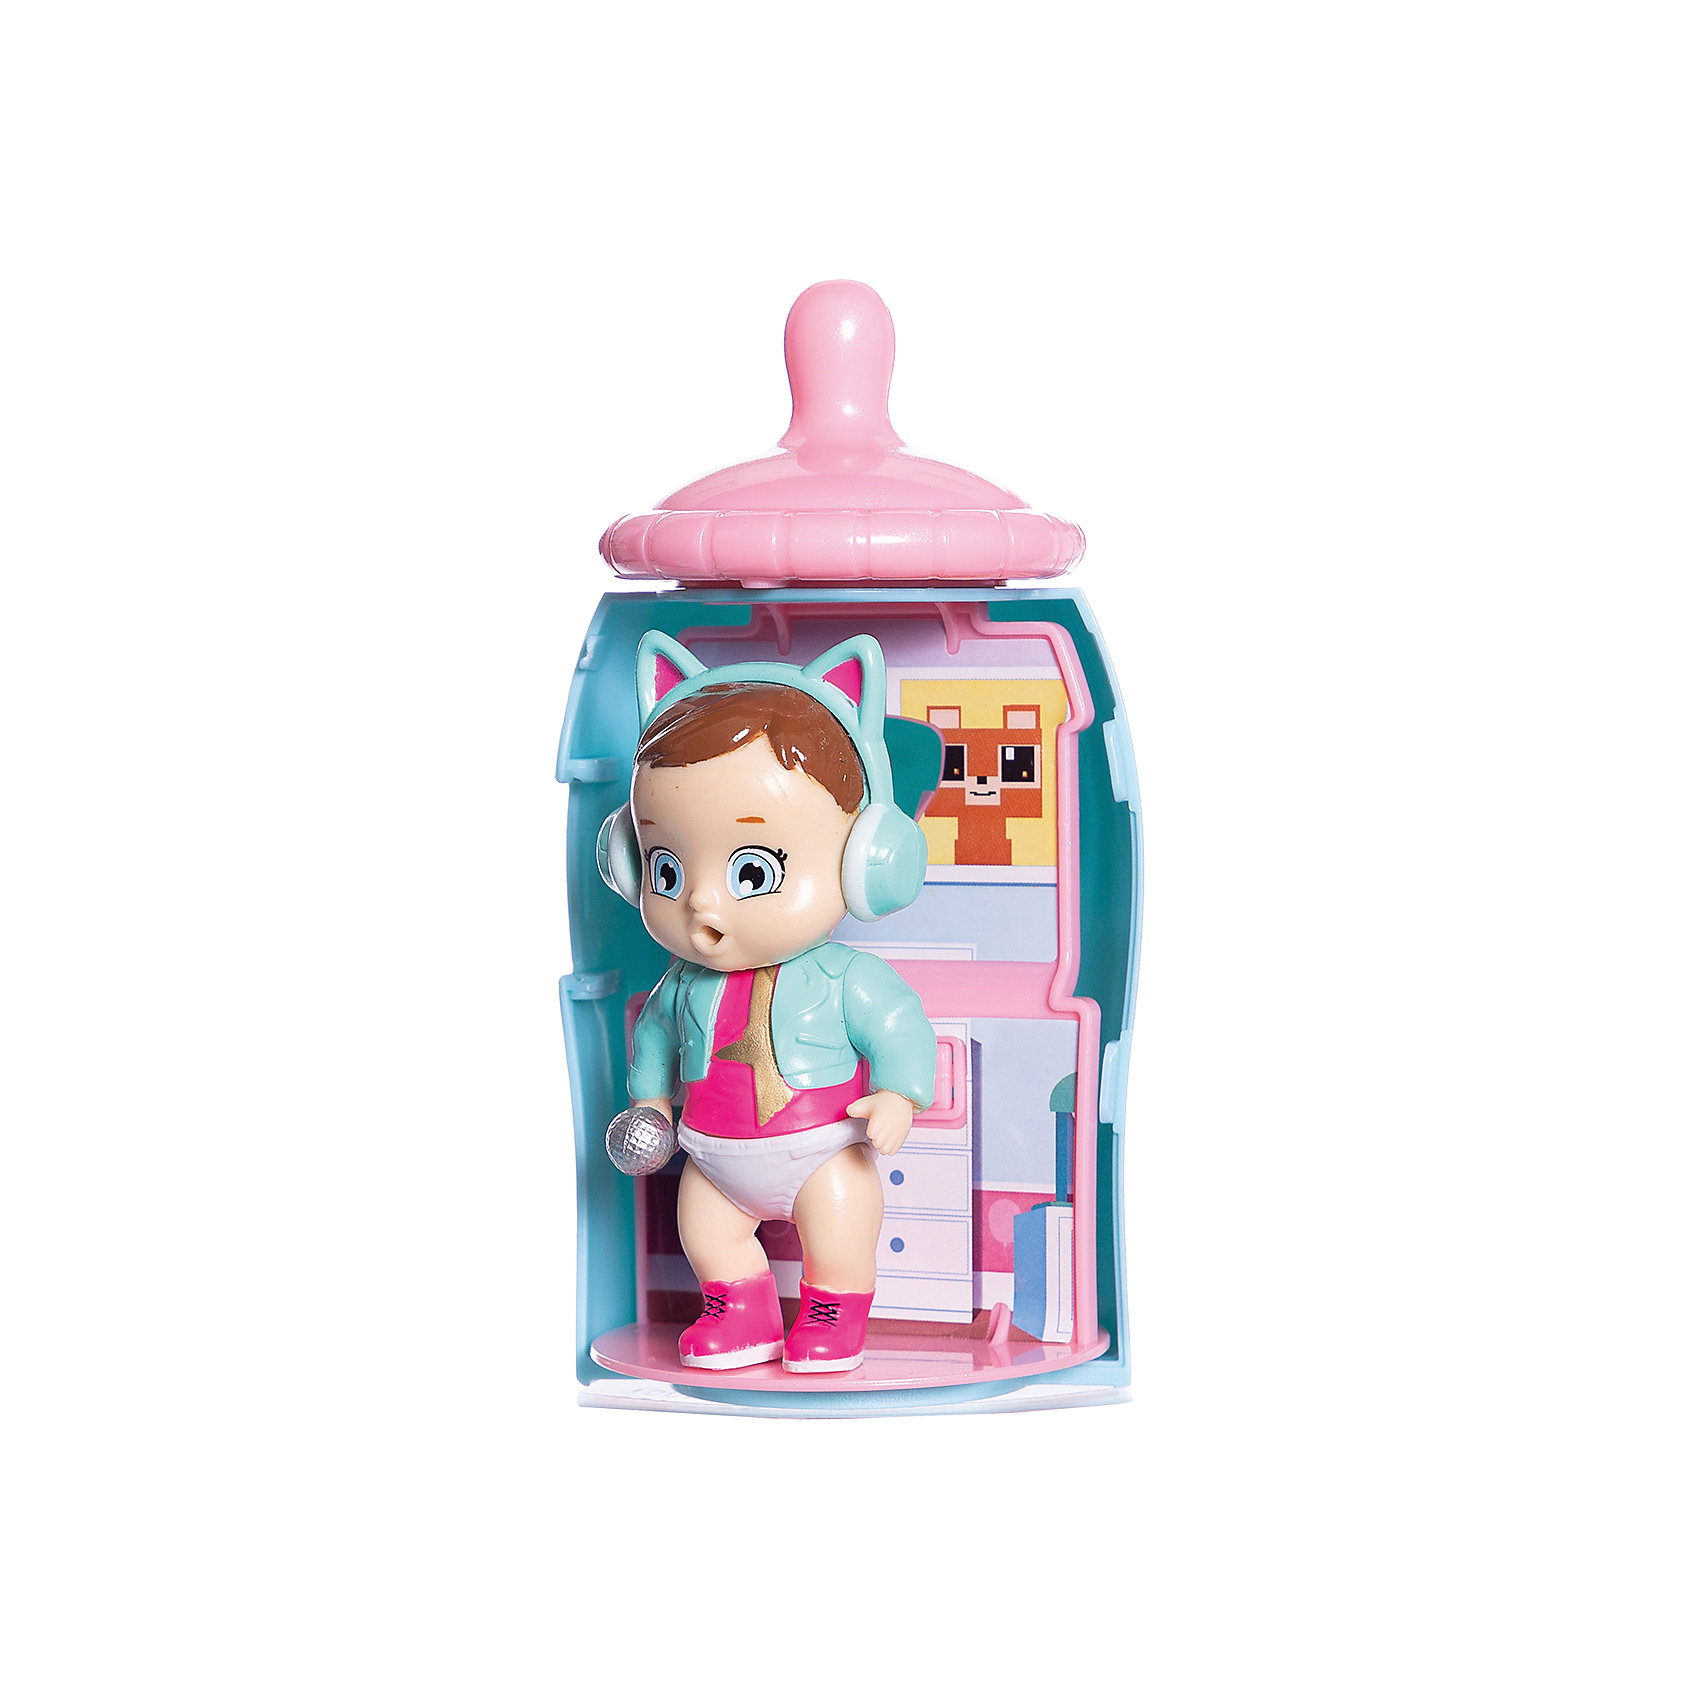 Мини-кукла Baby Secrets Bottle Surprise, в бутылочке ABtoys 13634115